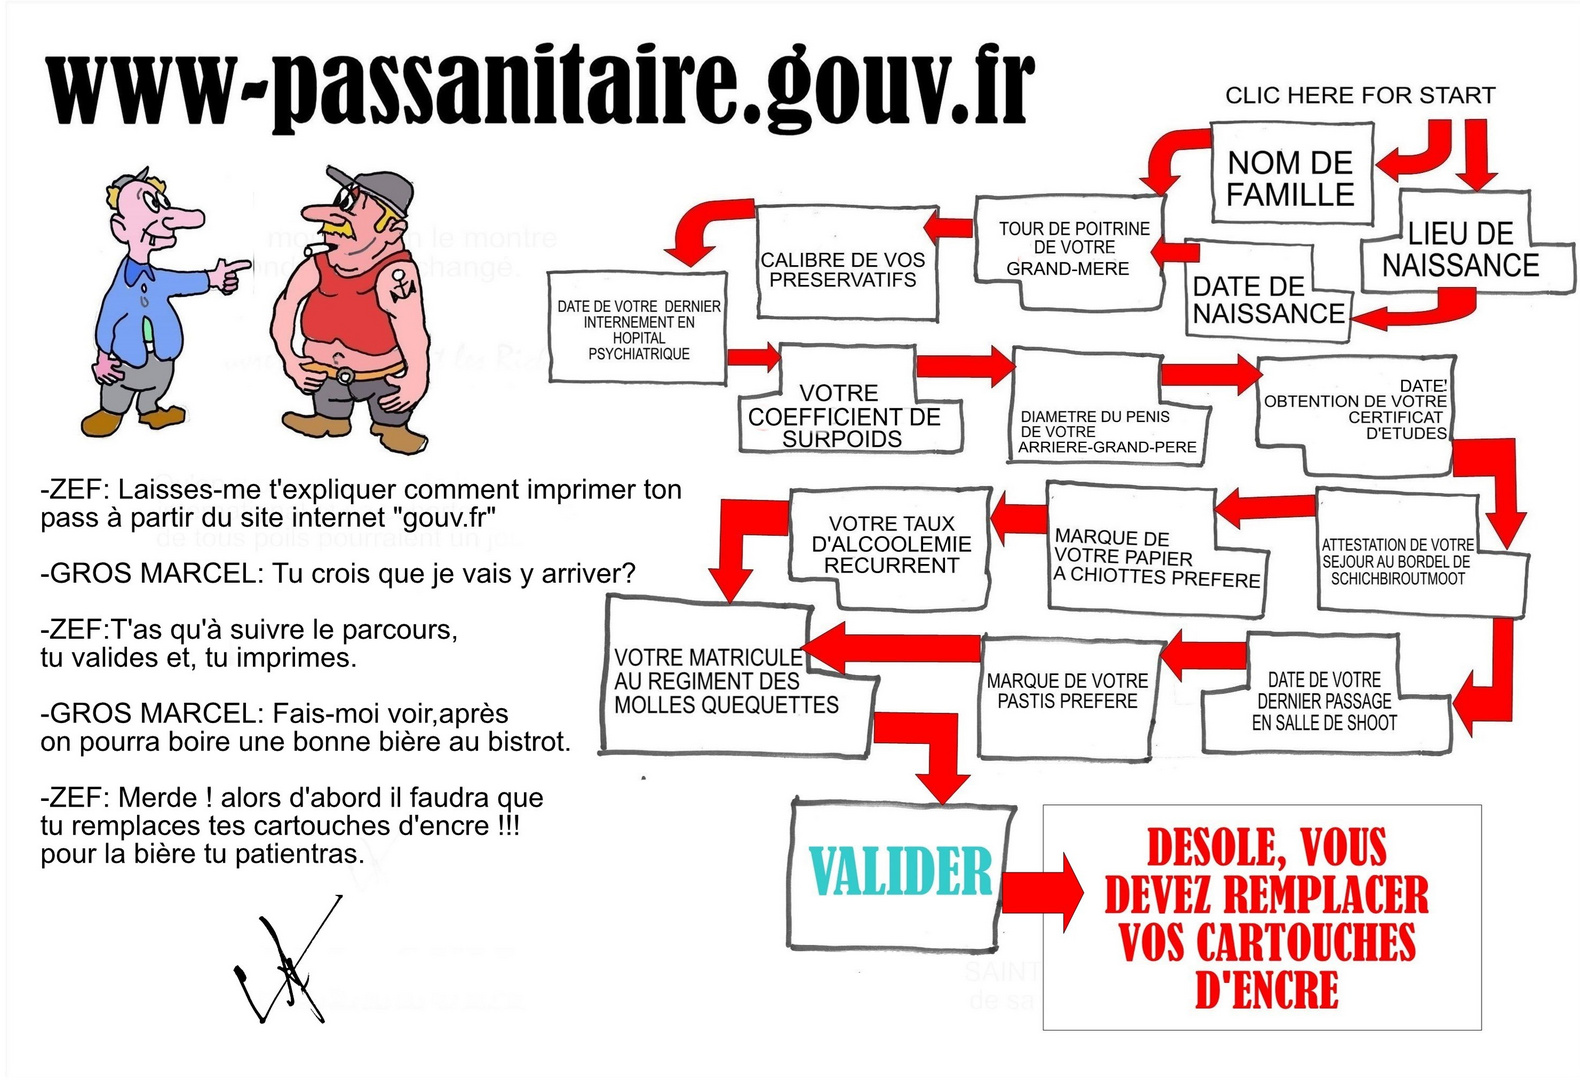 2021-09-11 WWW-PASSSANITAIRE.GOUV.fr